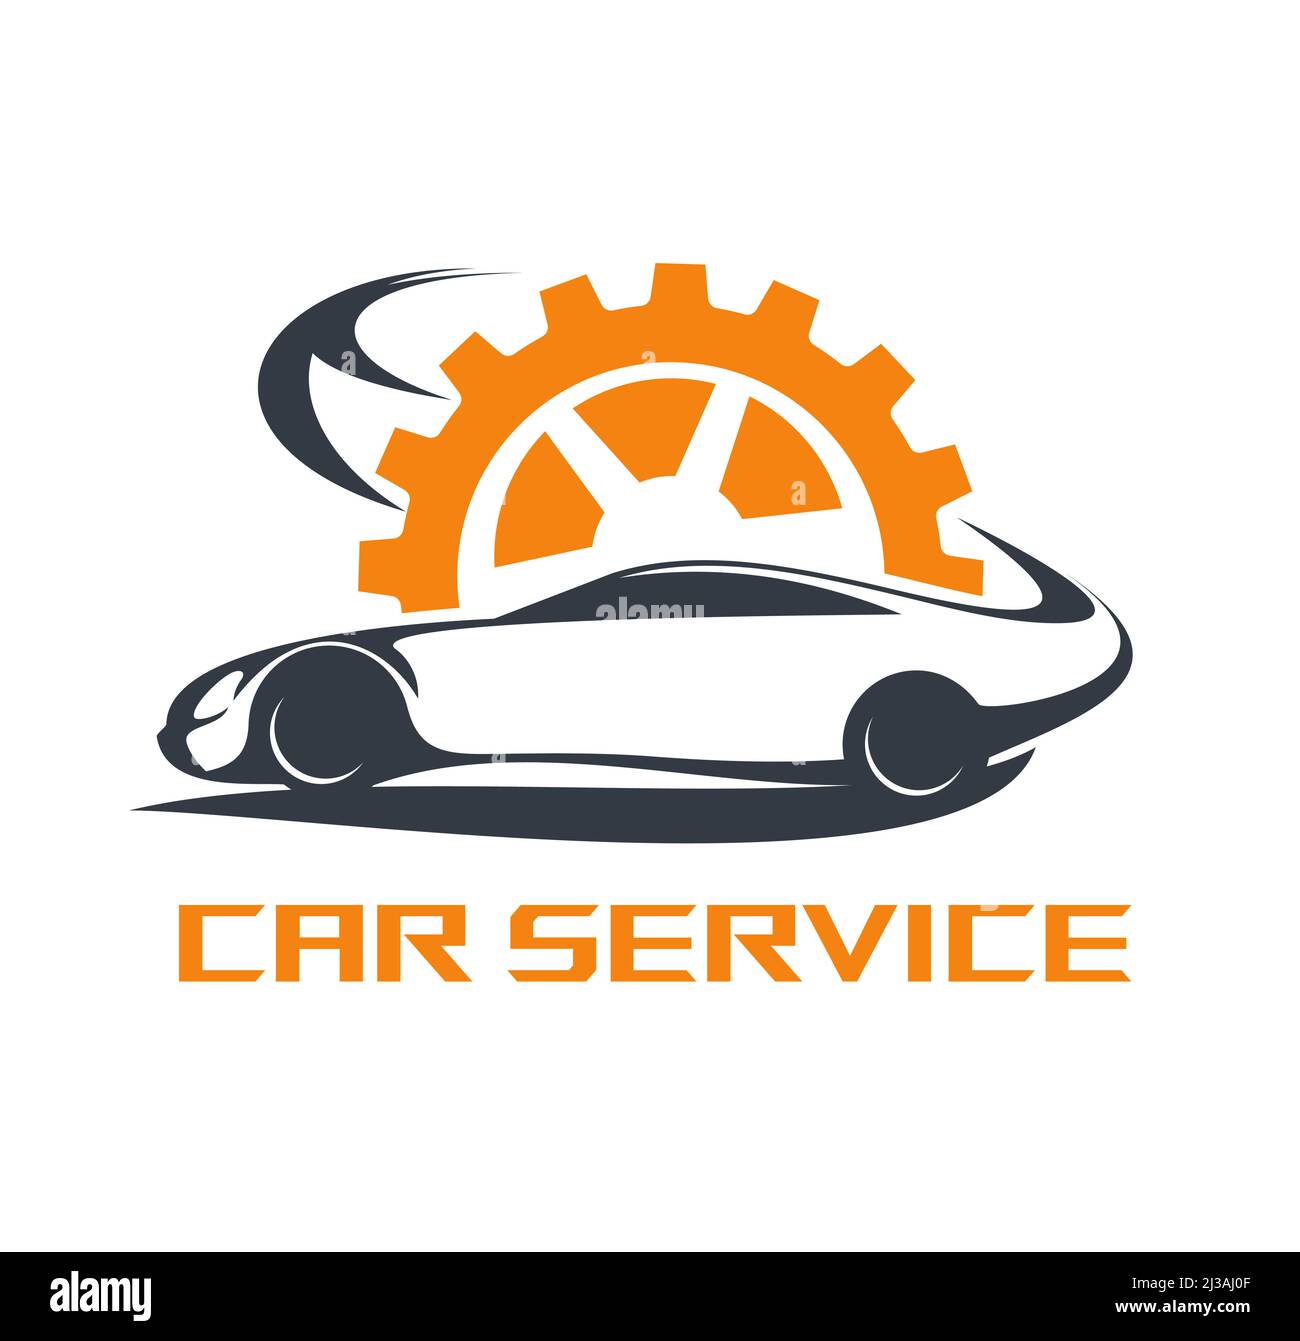 https://c8.alamy.com/comp/2J3AJ0F/car-service-icon-vehicle-maintenance-auto-repair-or-mechanic-garage-automobile-repair-shop-or-automotive-workshop-isolated-vector-symbol-with-black-car-and-orange-gear-wheel-silhouettes-2J3AJ0F.jpg